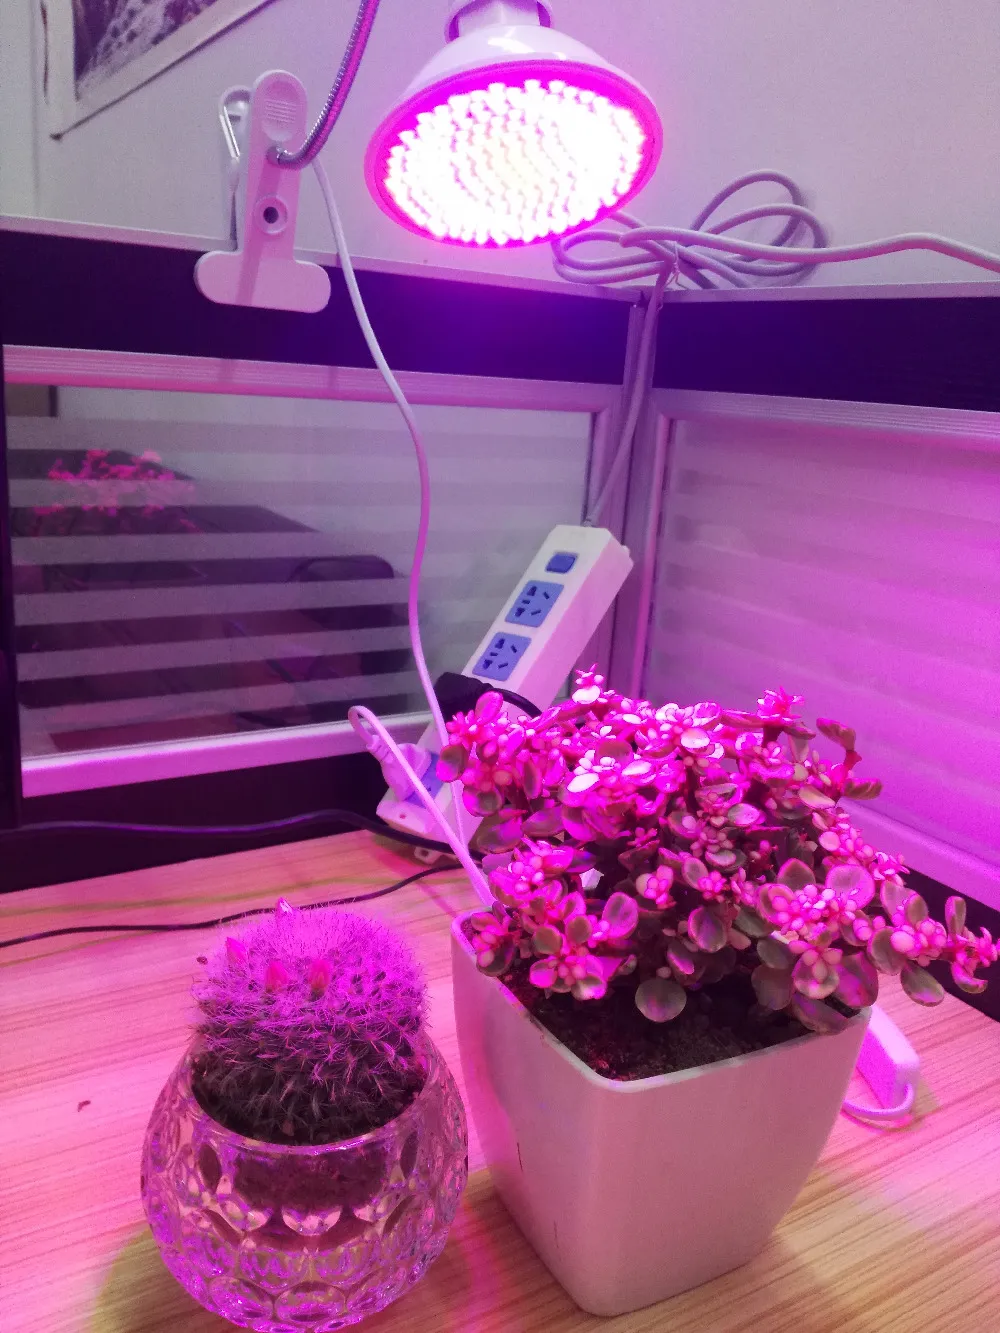 60 126 200 LED成長電球360植物花野菜のための柔軟なランプホルダークリップ成長屋内温室水耕栽培D2 0242Q